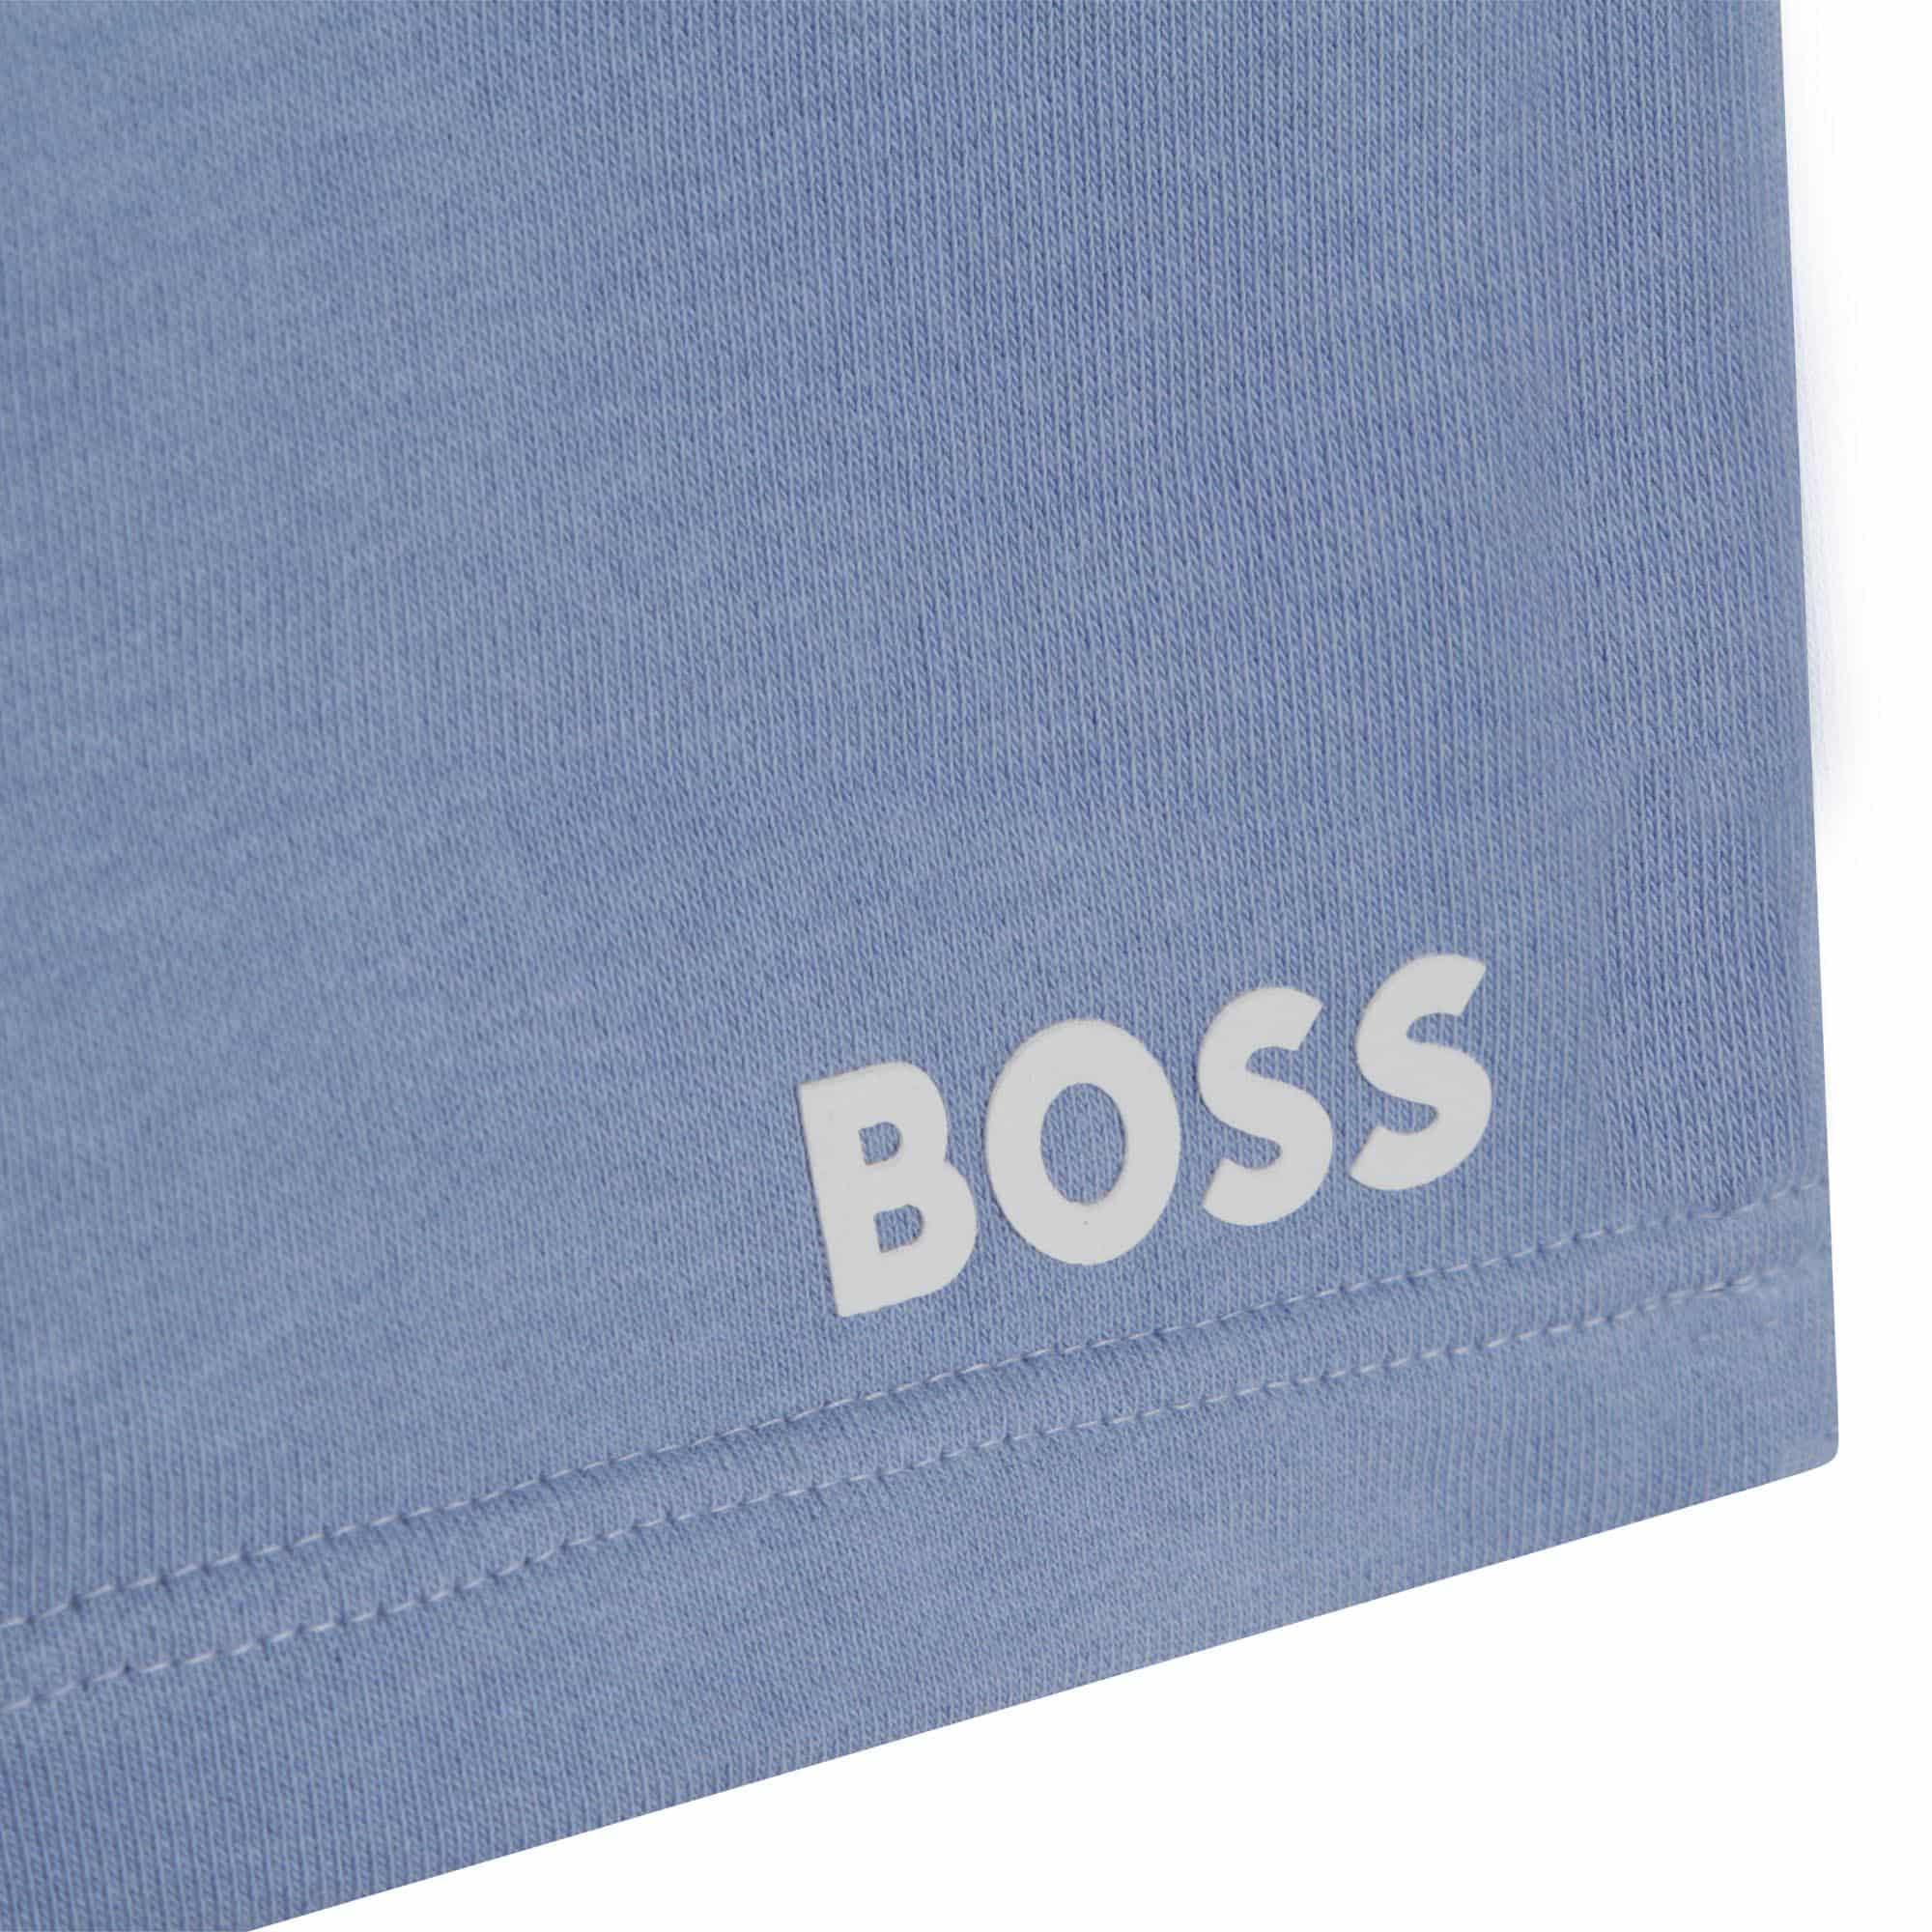 Boss boys blue shorts logo close up